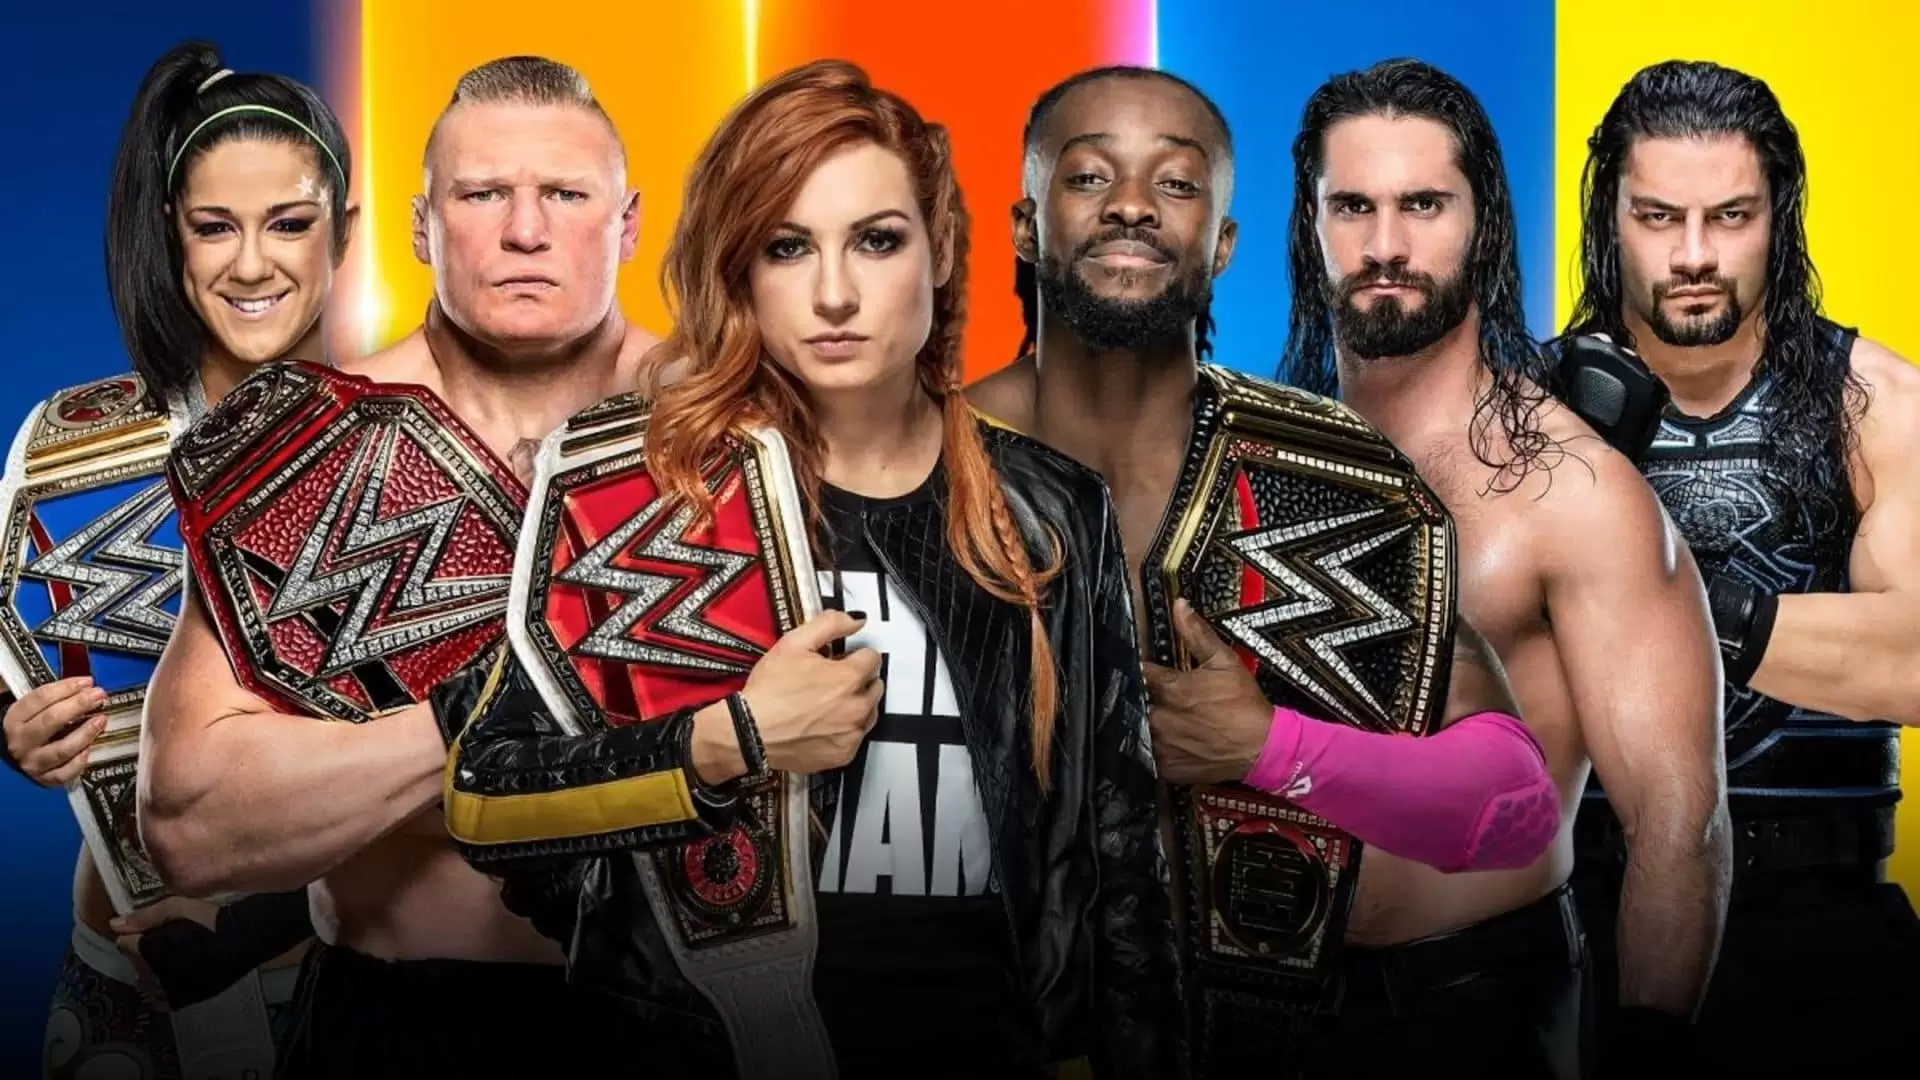 دانلود فیلم WWE: SummerSlam 2019 (دبلیو دبلیو ای :سامر اسلم)